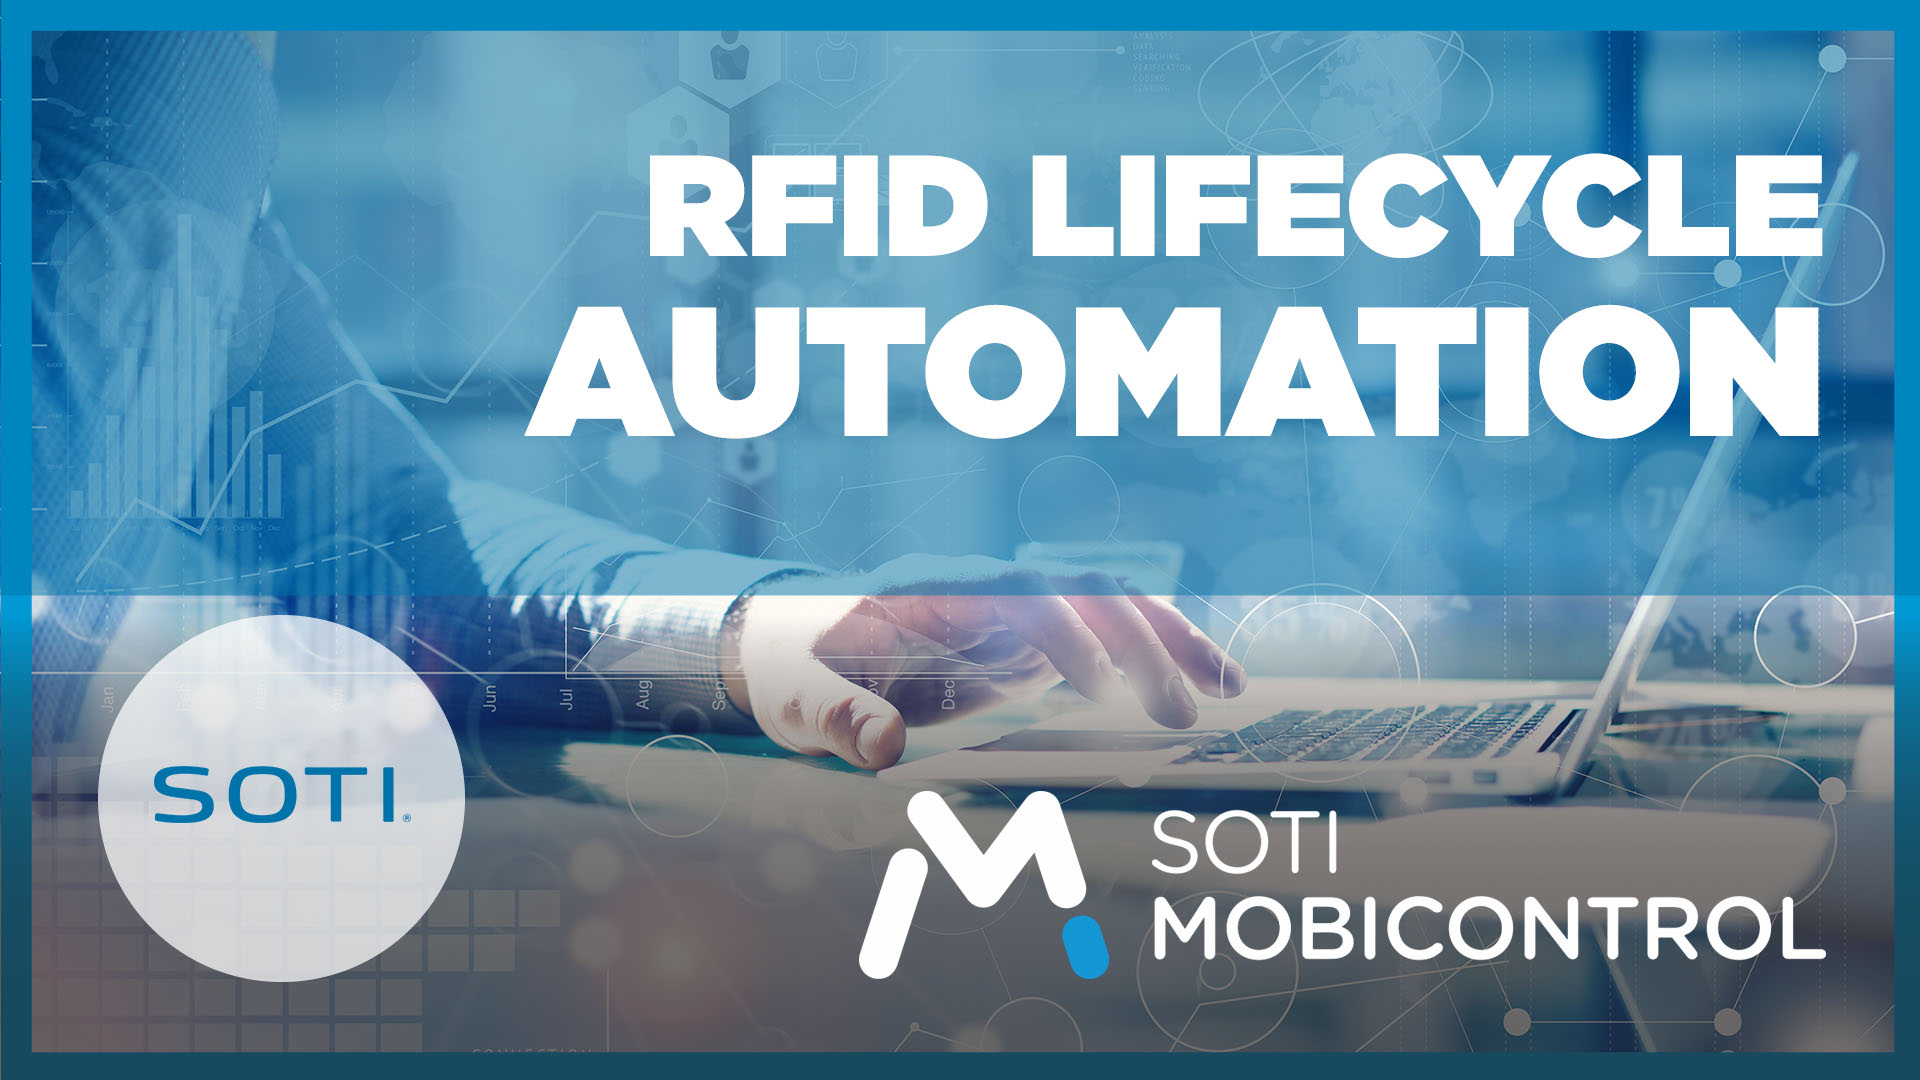 SOTI RFID Solution Certified